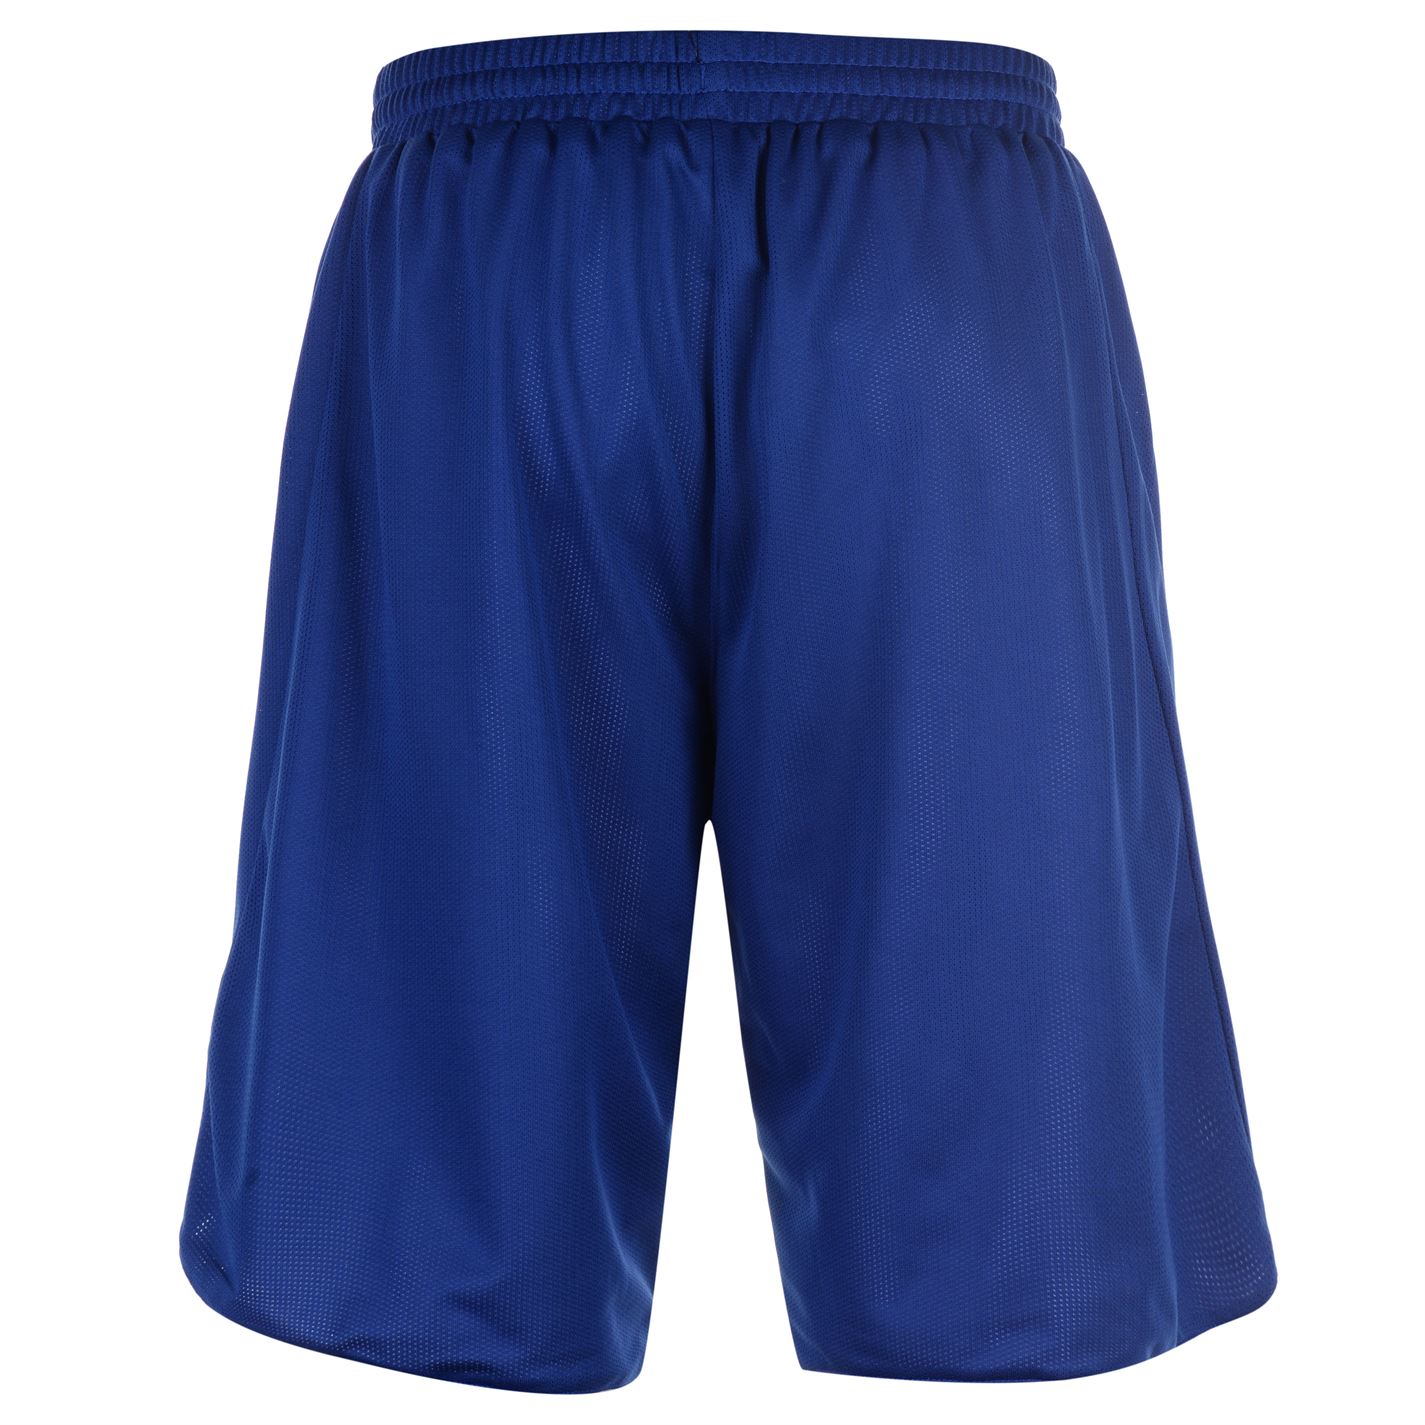 Spalding Mens Reversible Basketball Shorts Pants Trousers Bottoms ...